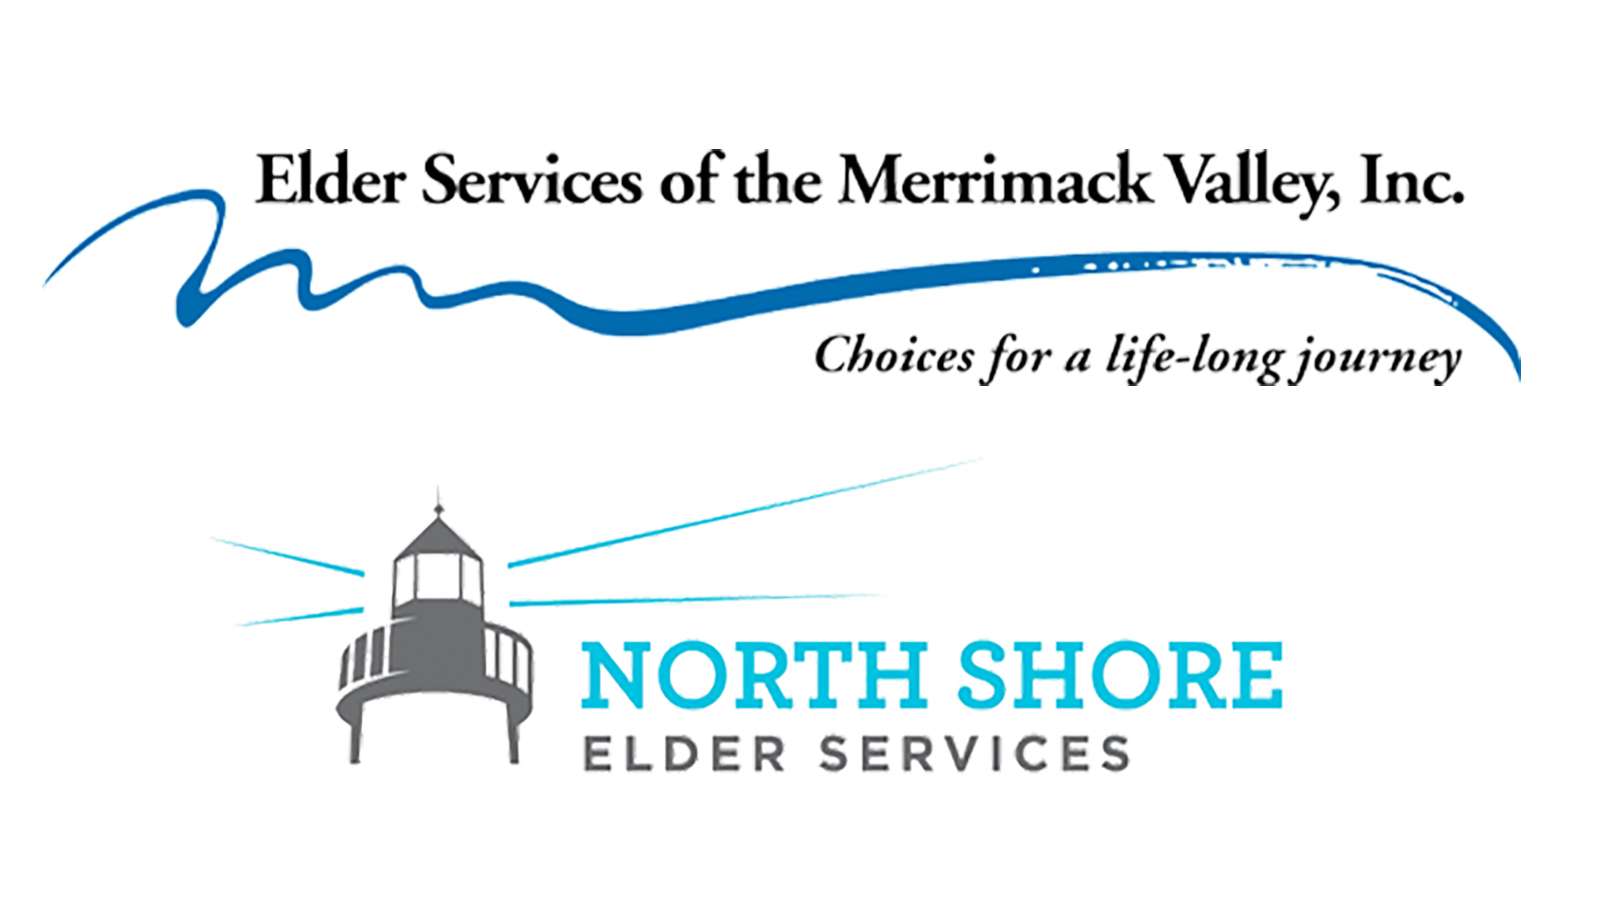 Elder Service of the Merrimack Valley and North Shore Elder Services